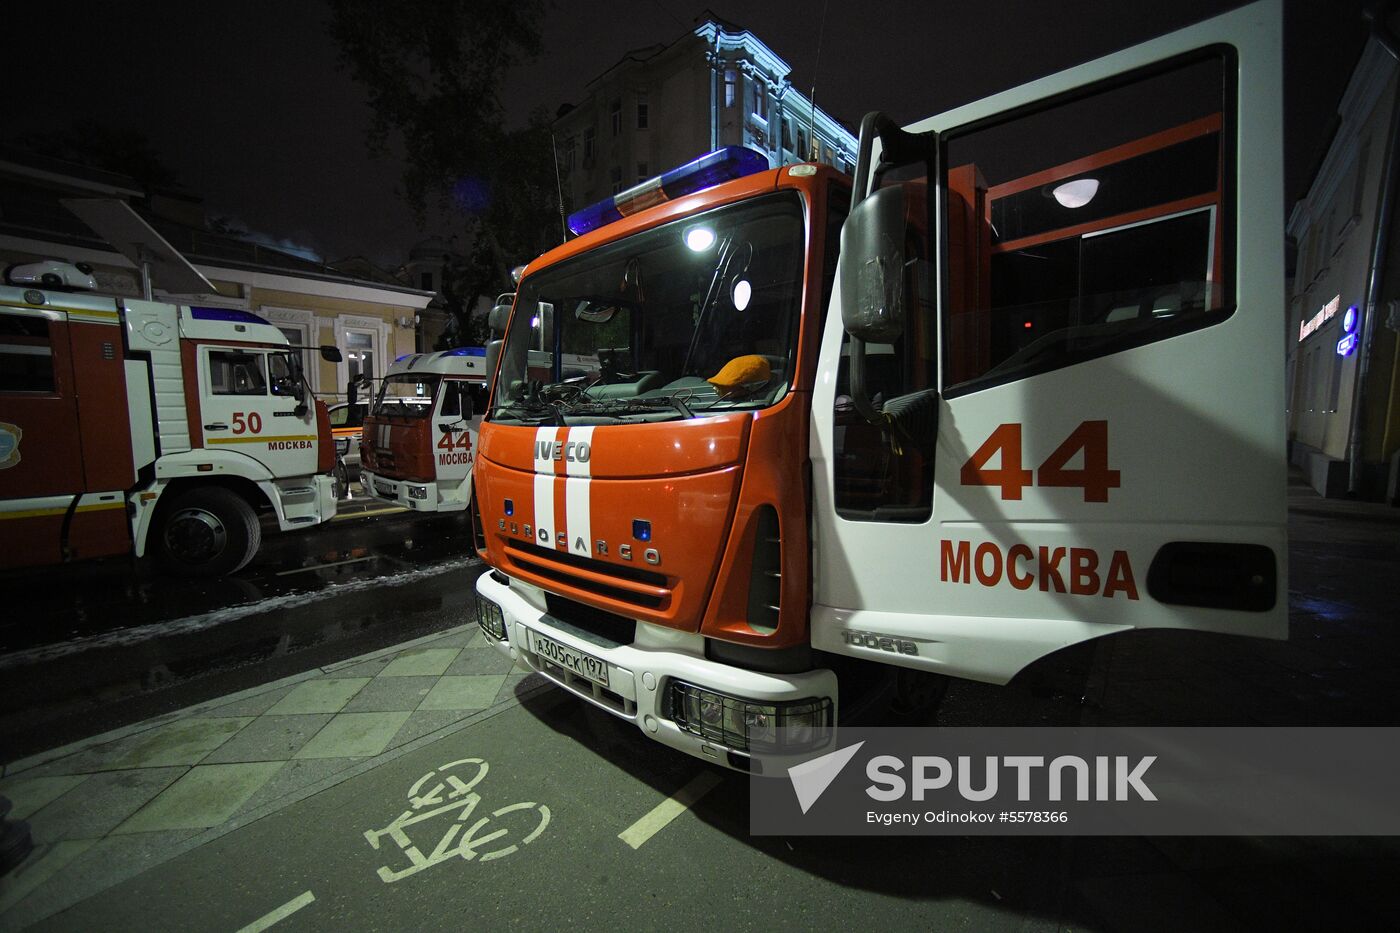 Residential building catches fire on Moscow's Pyatnitskaya Street